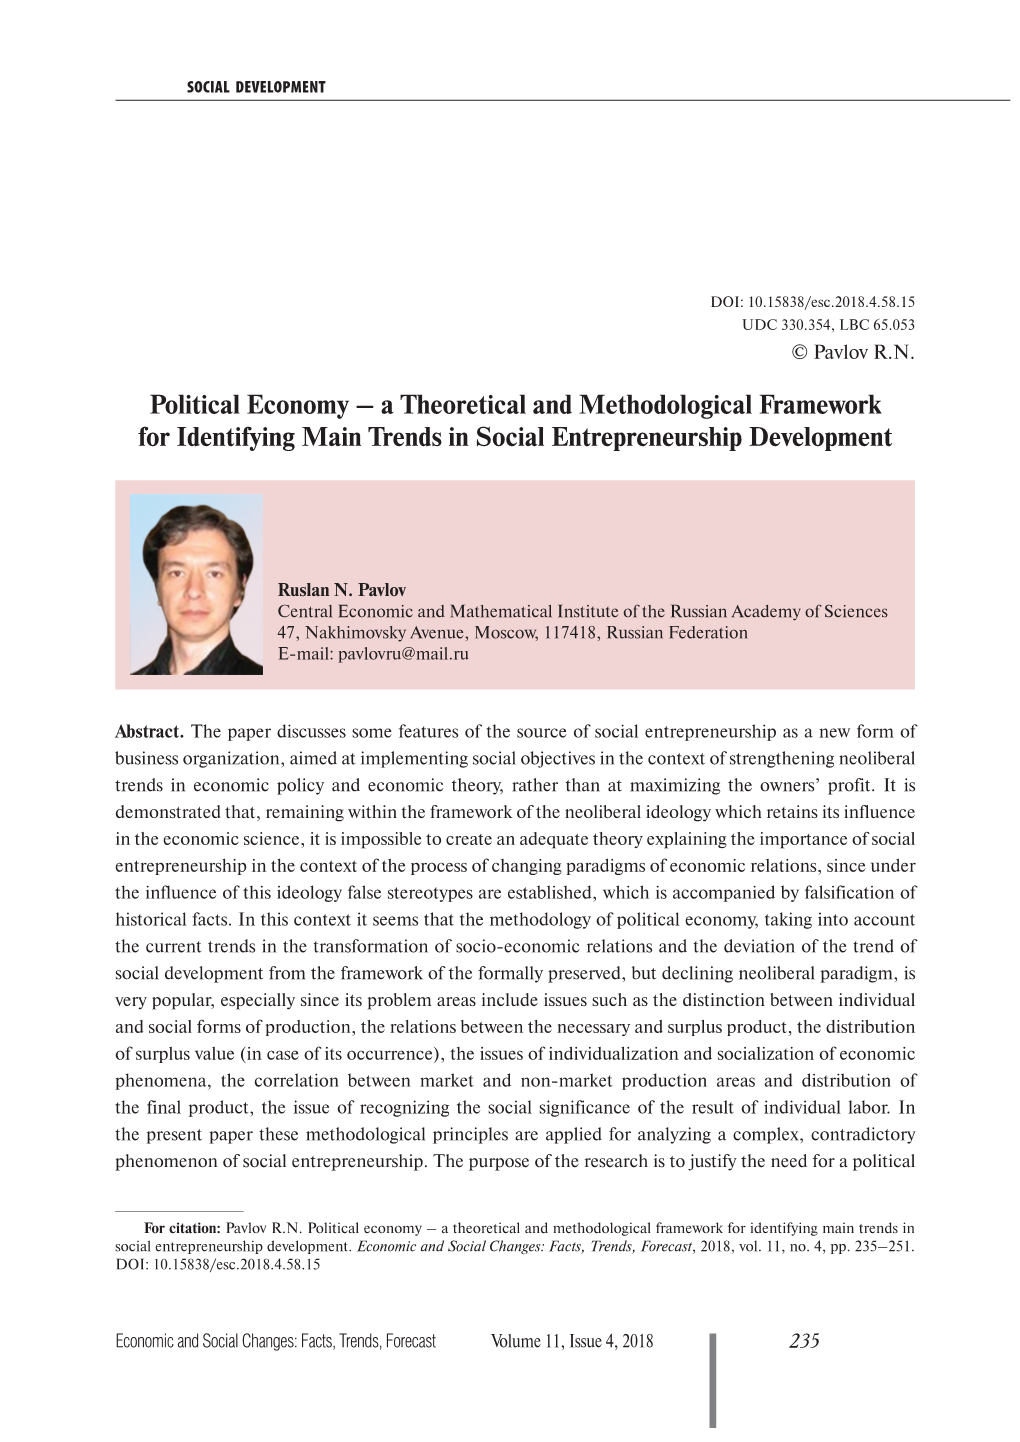 Political Economy – a Theoretical and Methodological Framework for Identifying Main Trends in Social Entrepreneurship Development